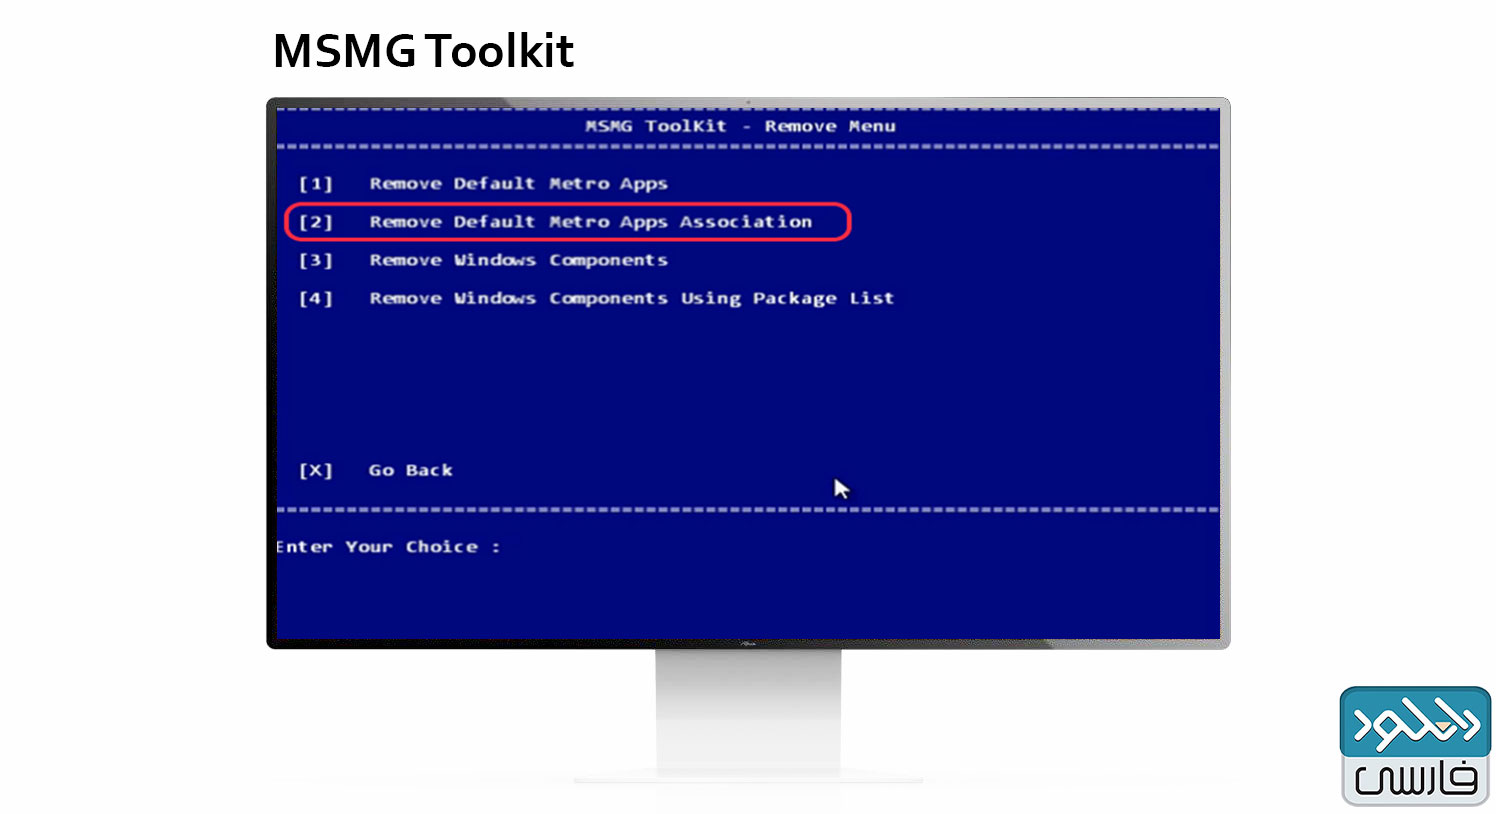 msmg toolkit vs ms toolkit